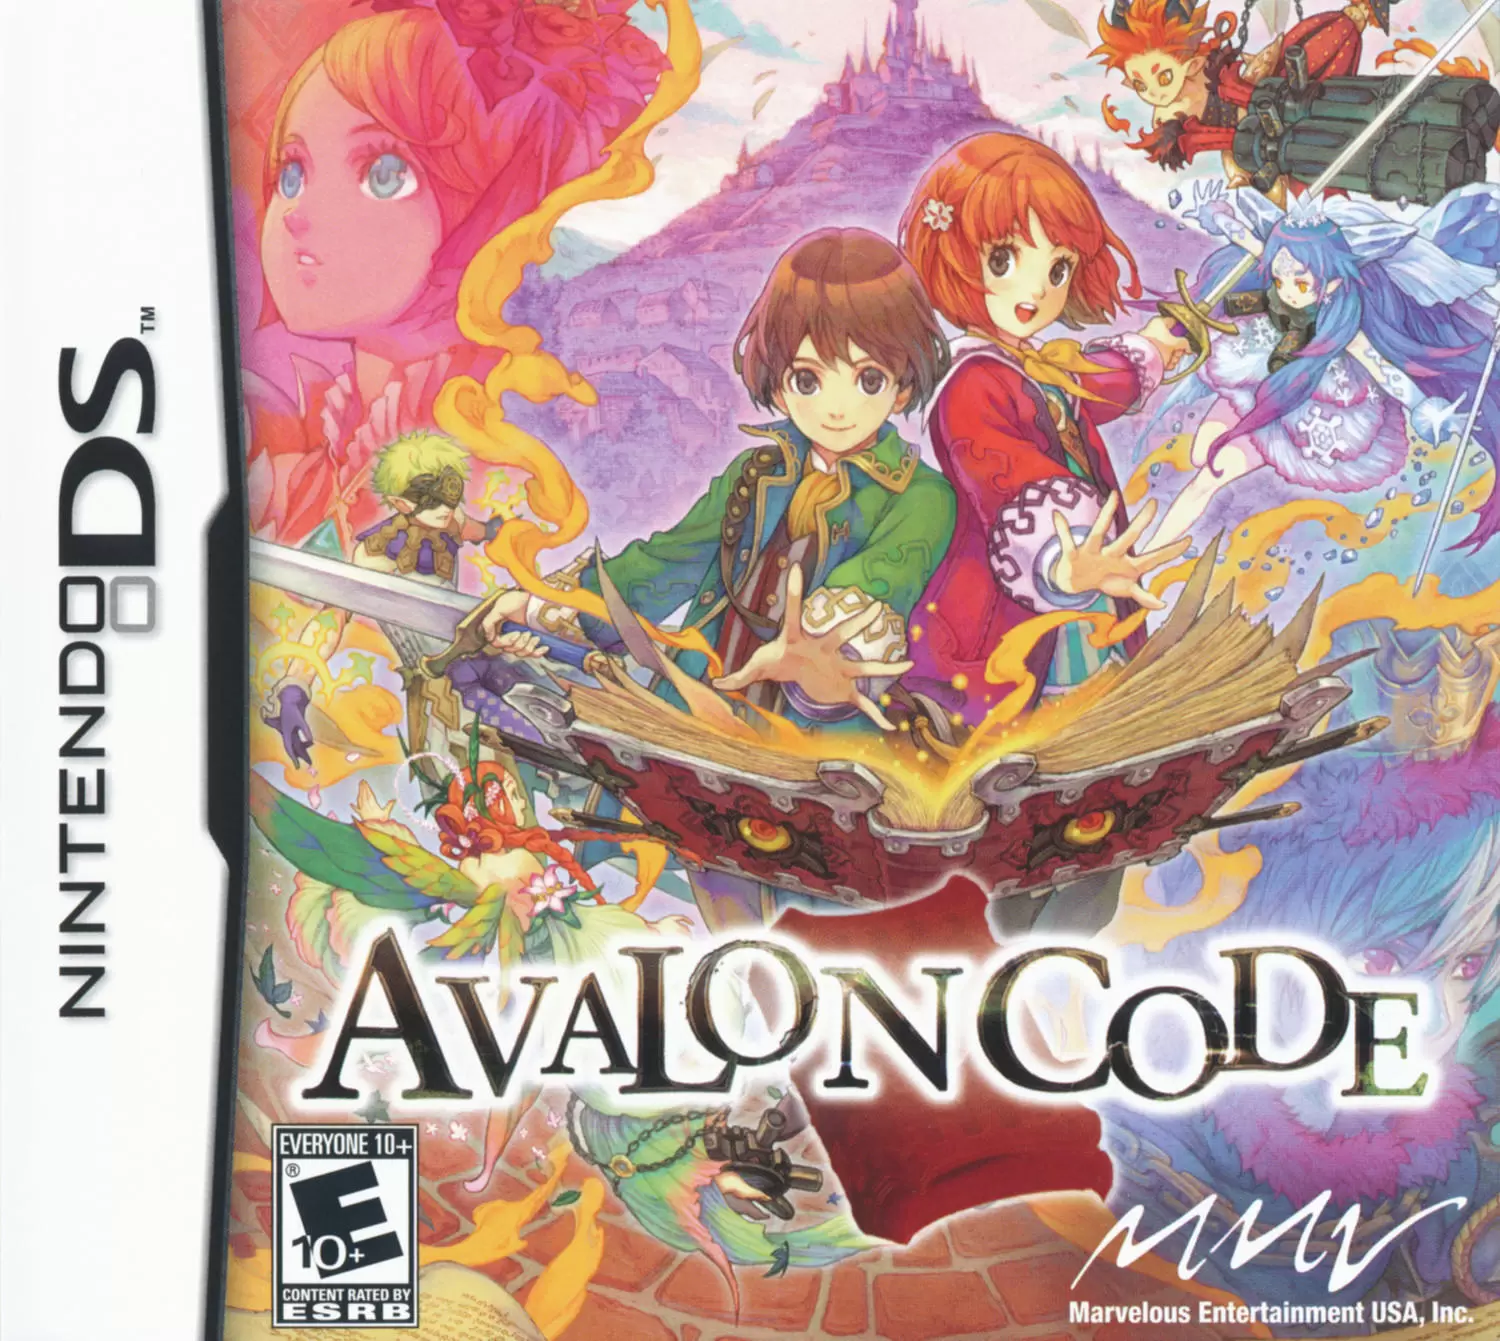 Nintendo DS Games - Avalon Code